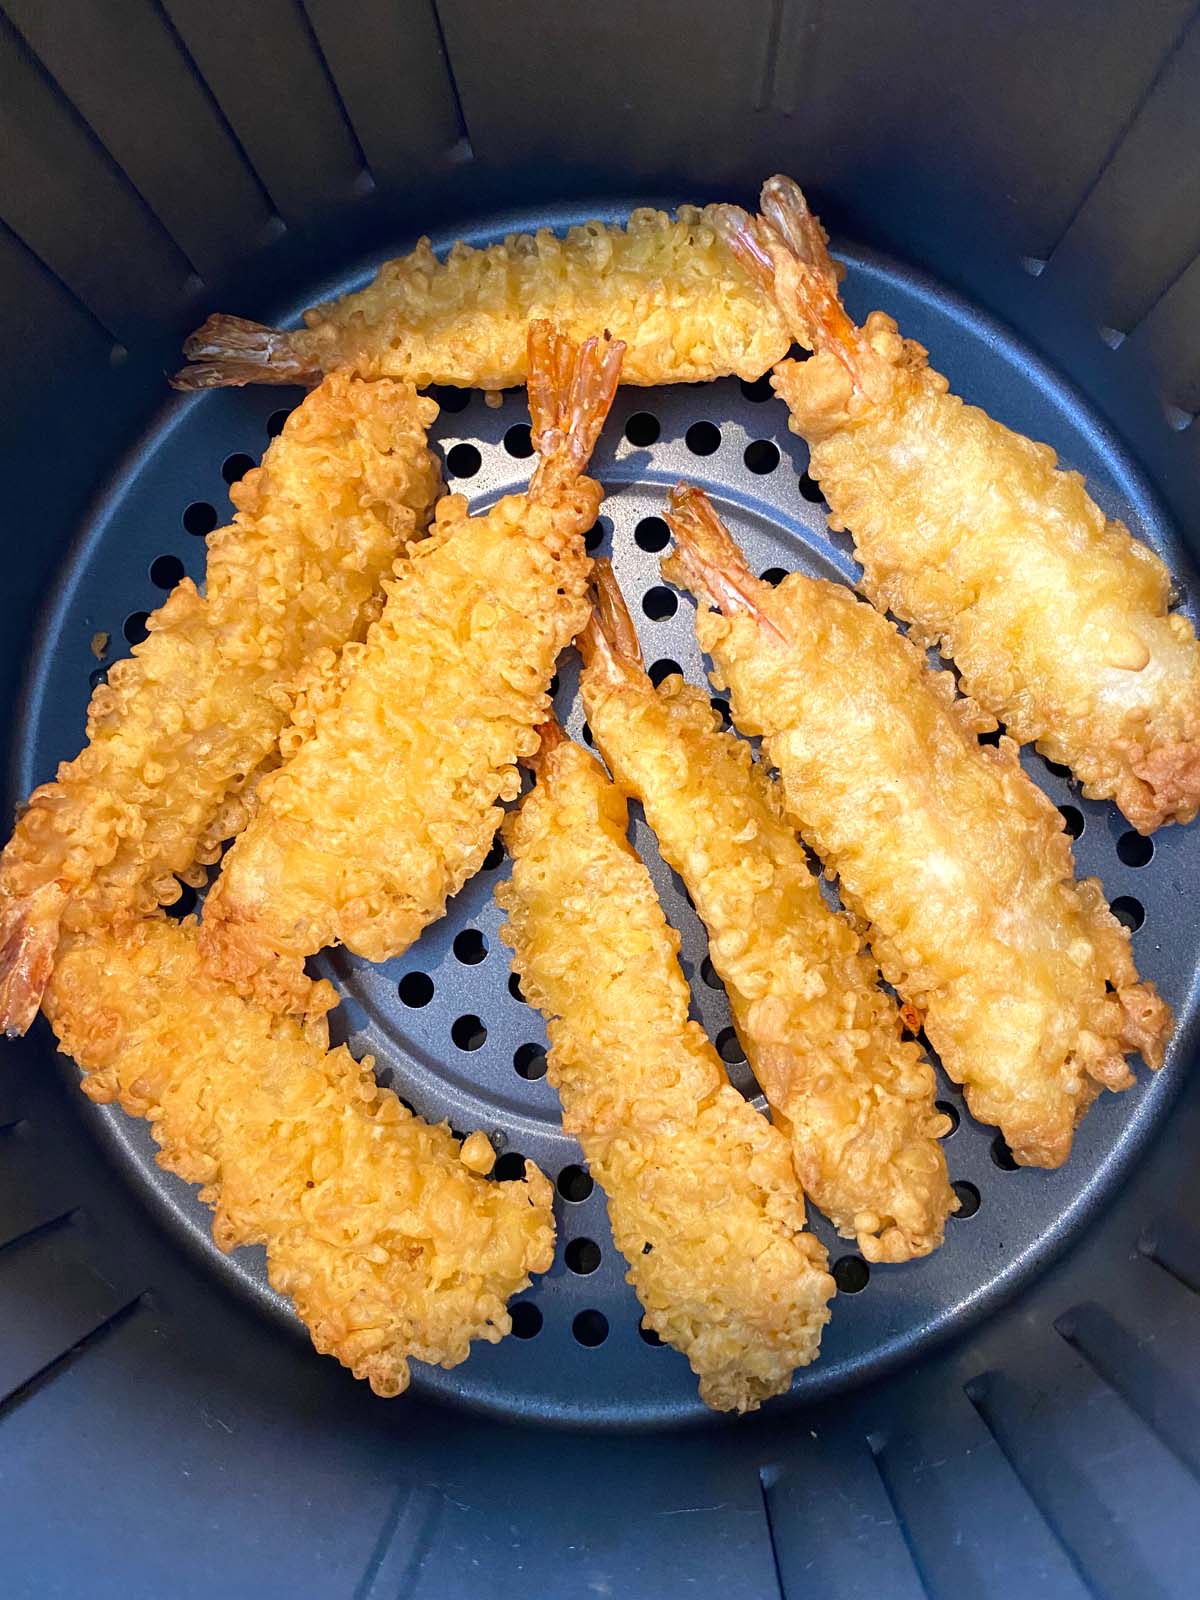 8 pieces of tempura shrimp in an air fryer basket.